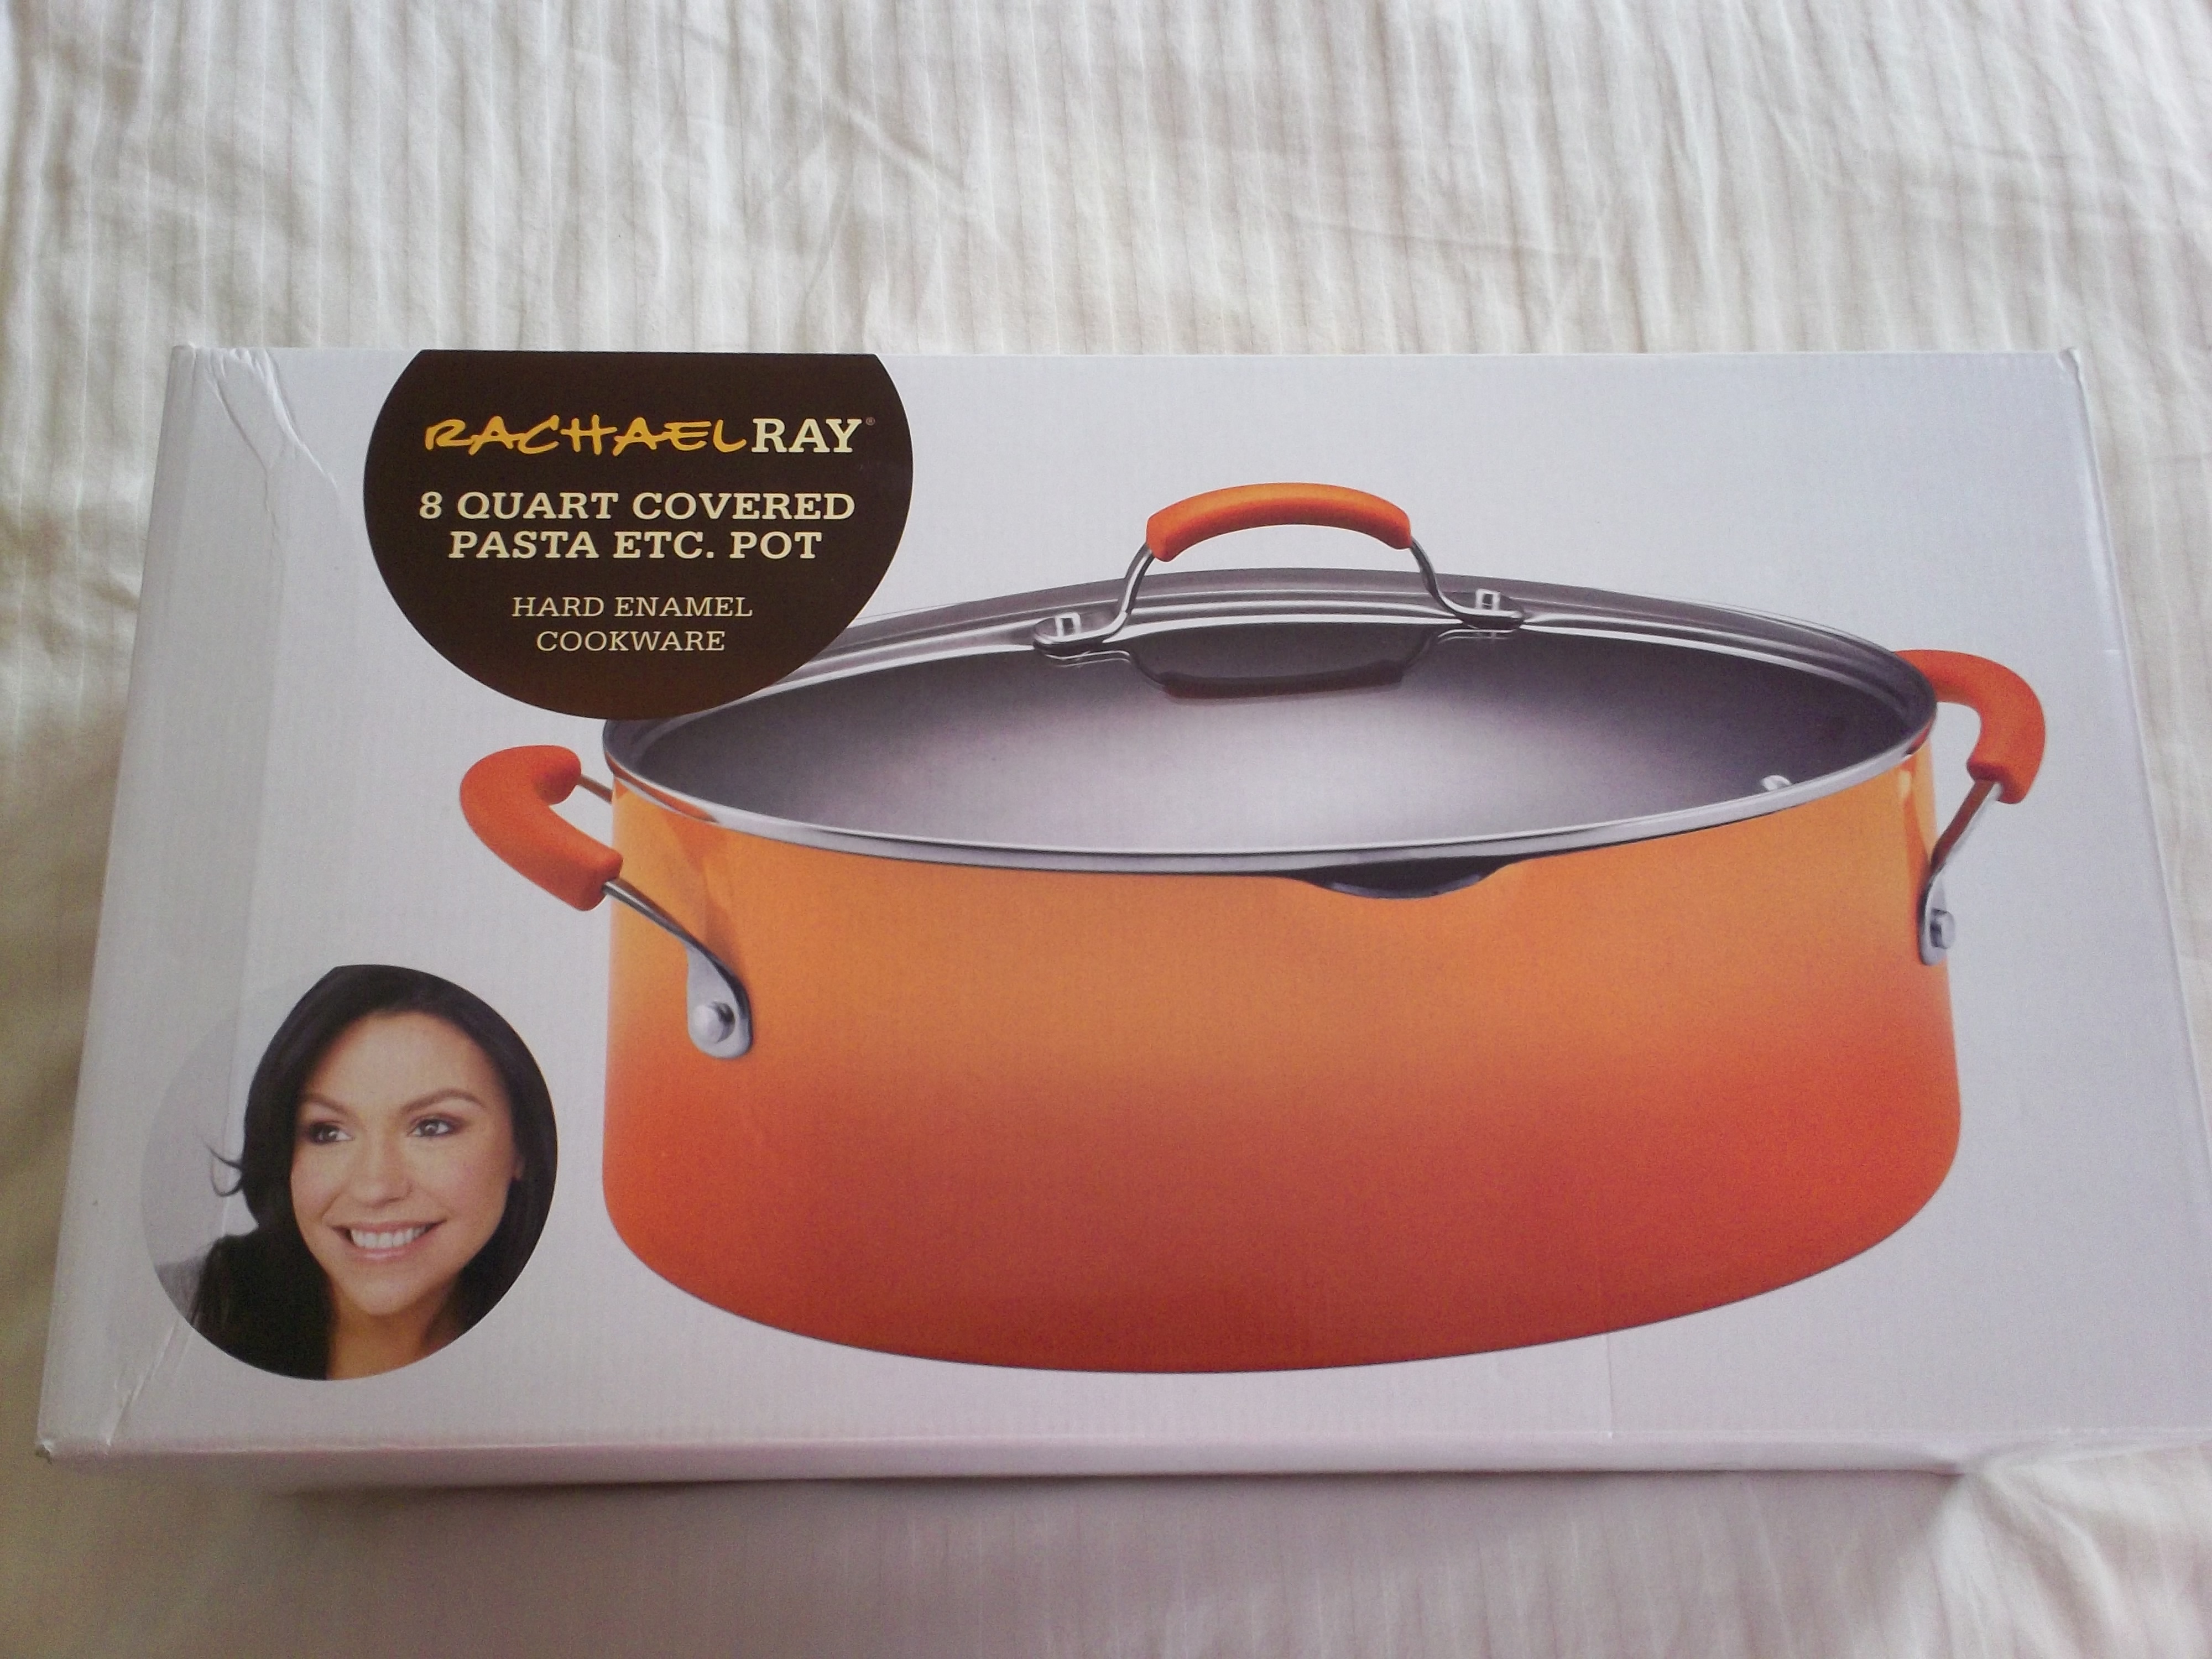 Rachael Ray Cucina Porcelain Enamel 8 Qt. Covered Oval Pasta Pot